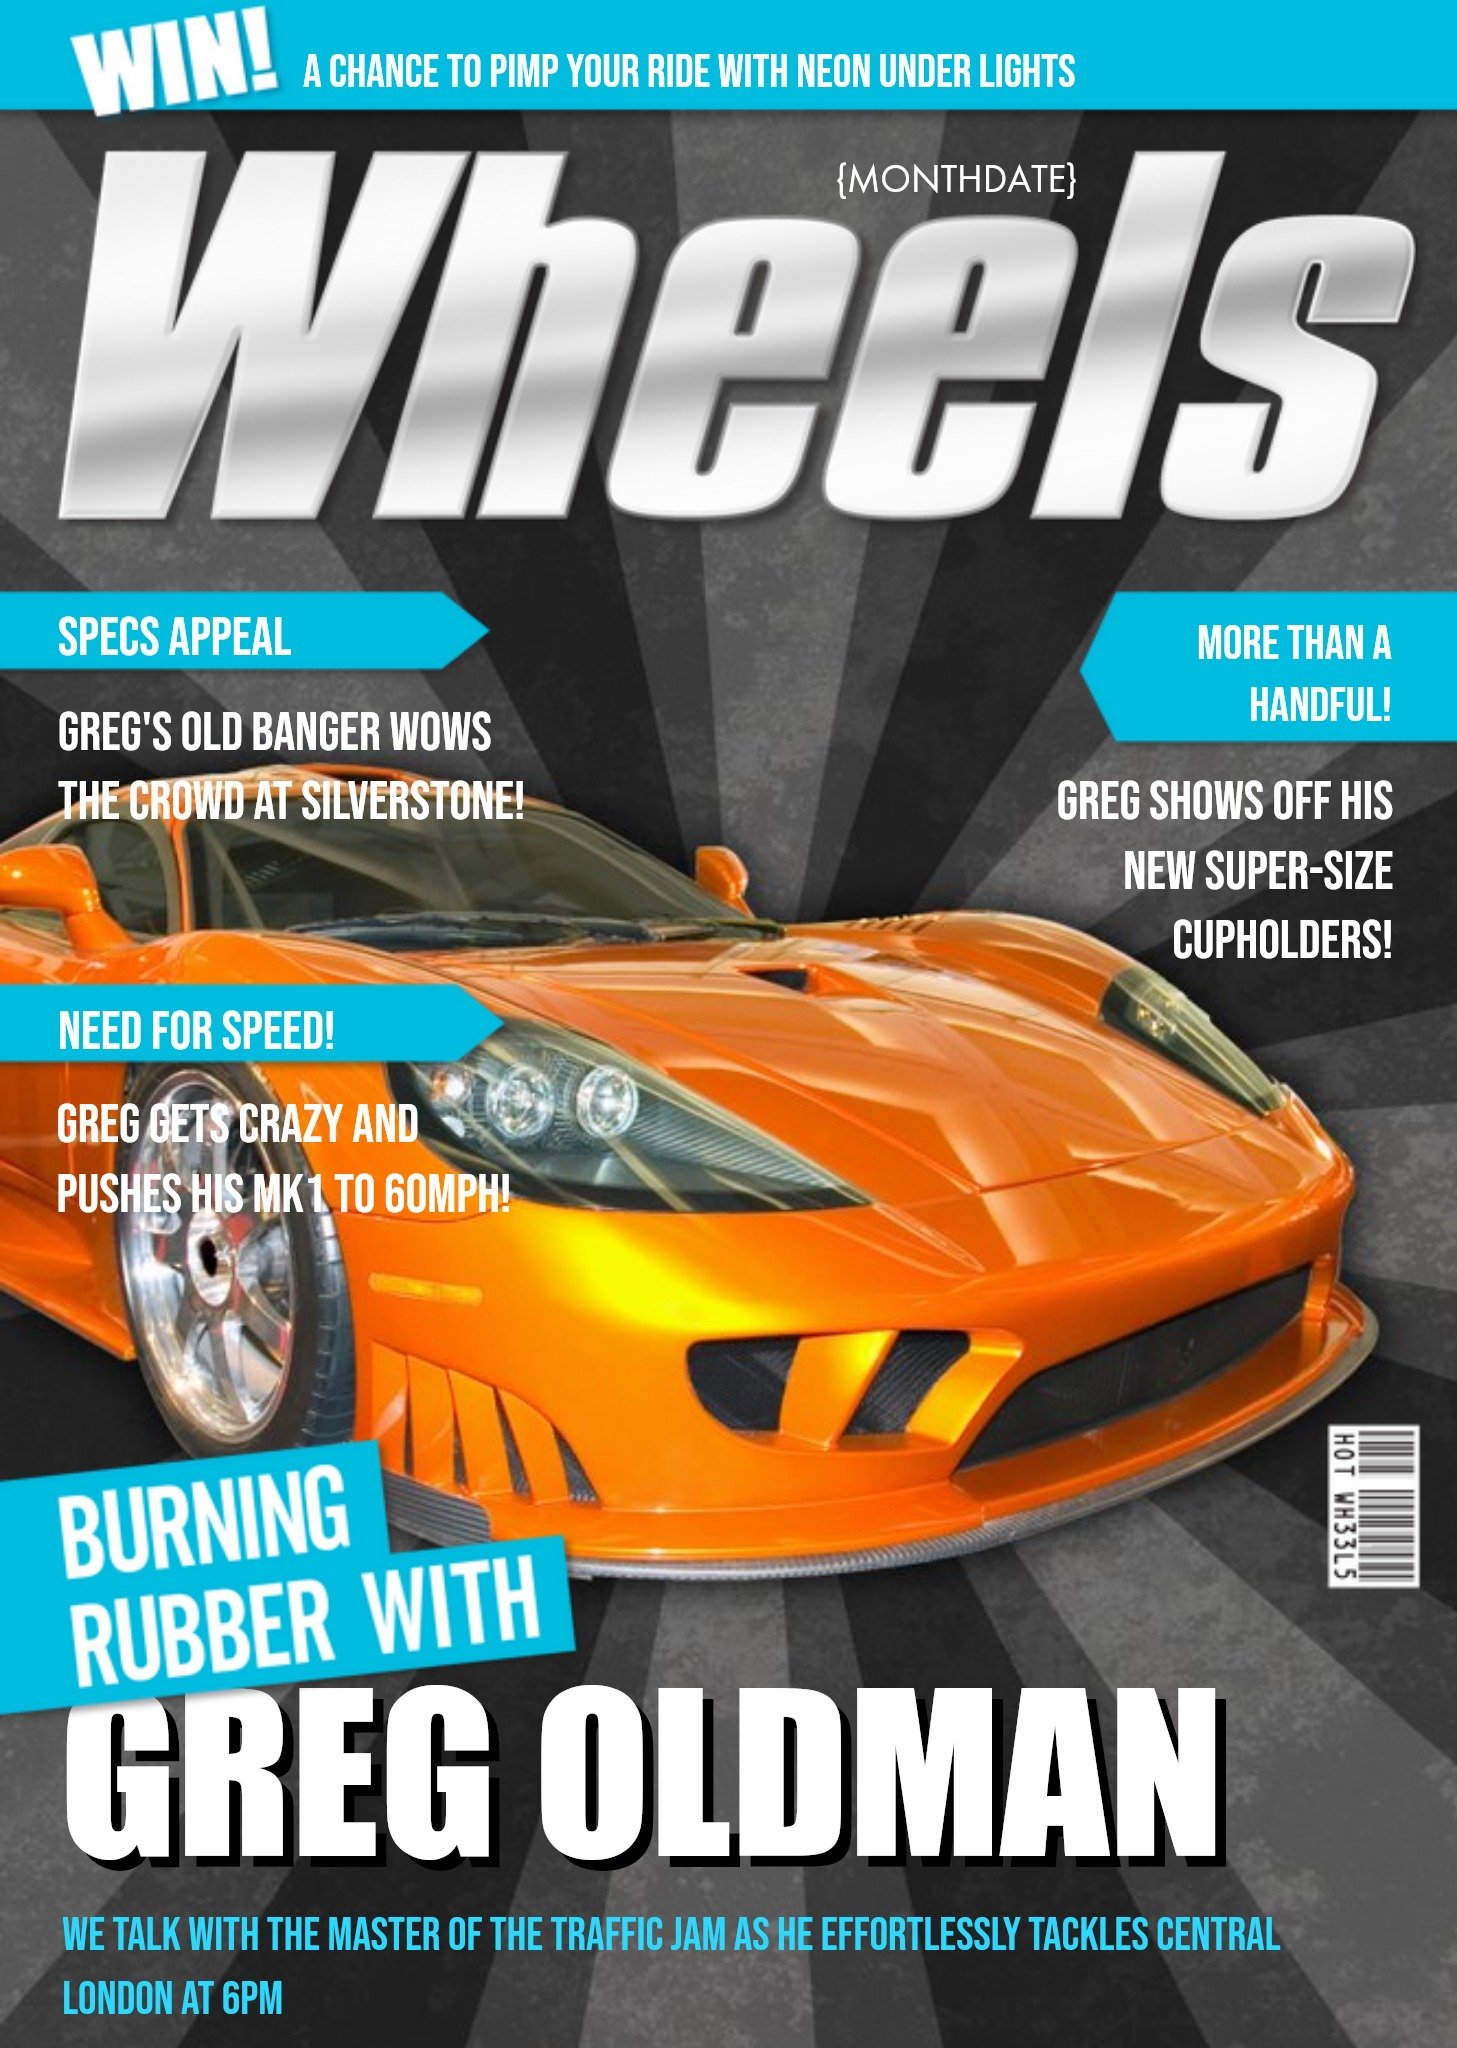 Moonpig Wheels Magazine Need For Speed Personalised Birthday Card, Large